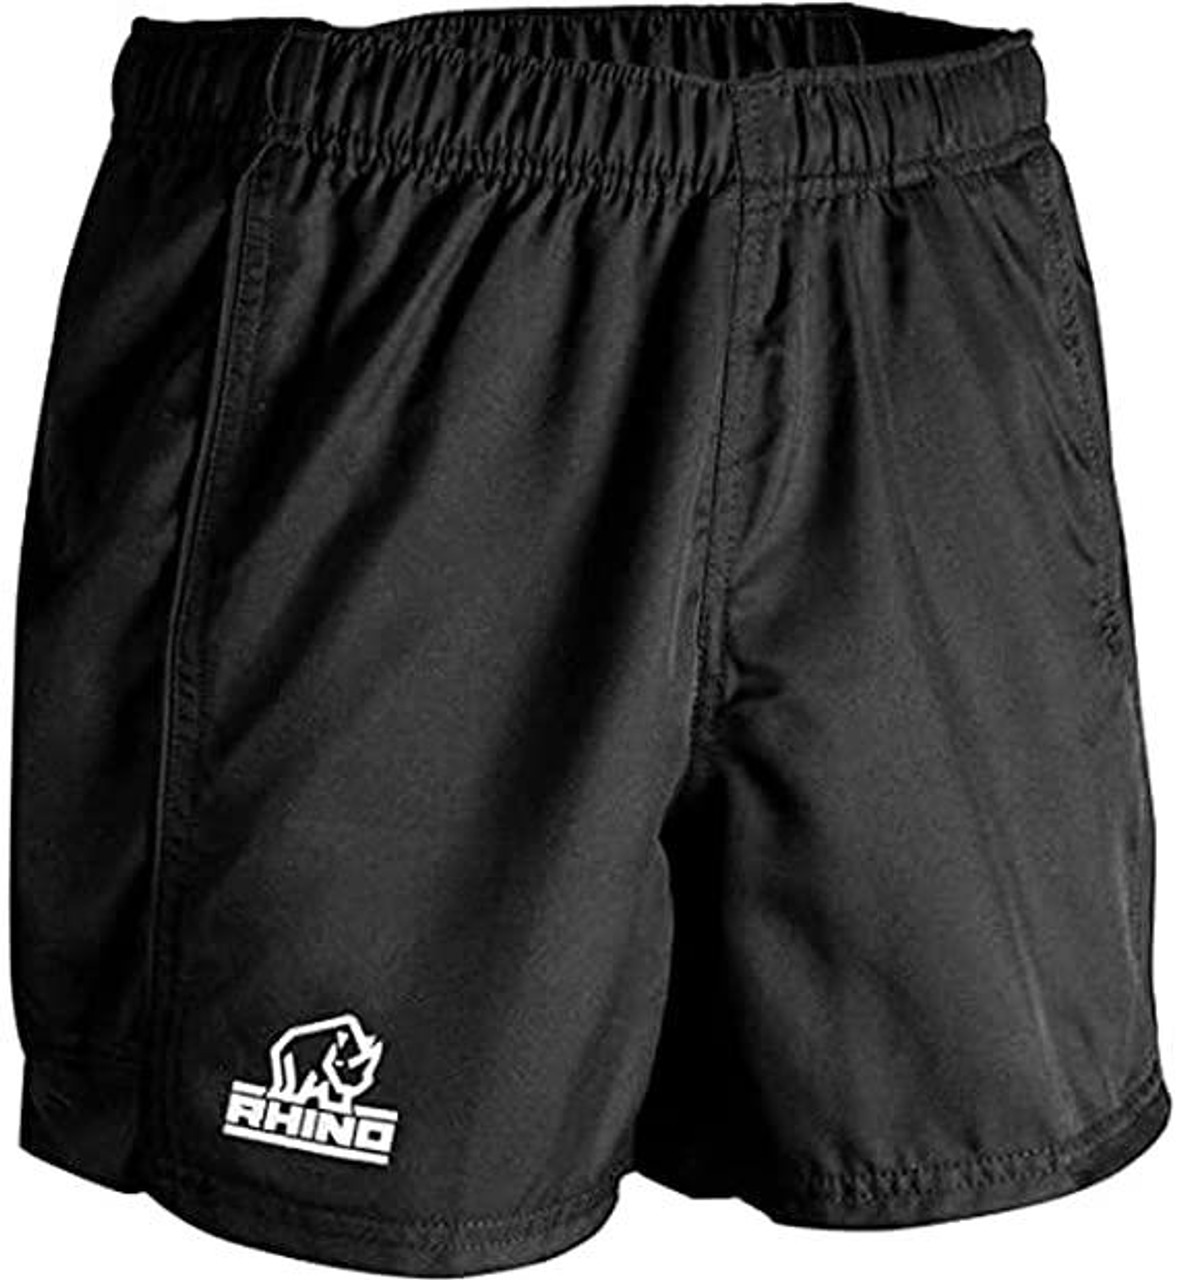 Rhino Auckland R/Shorts Adult Black - Medium